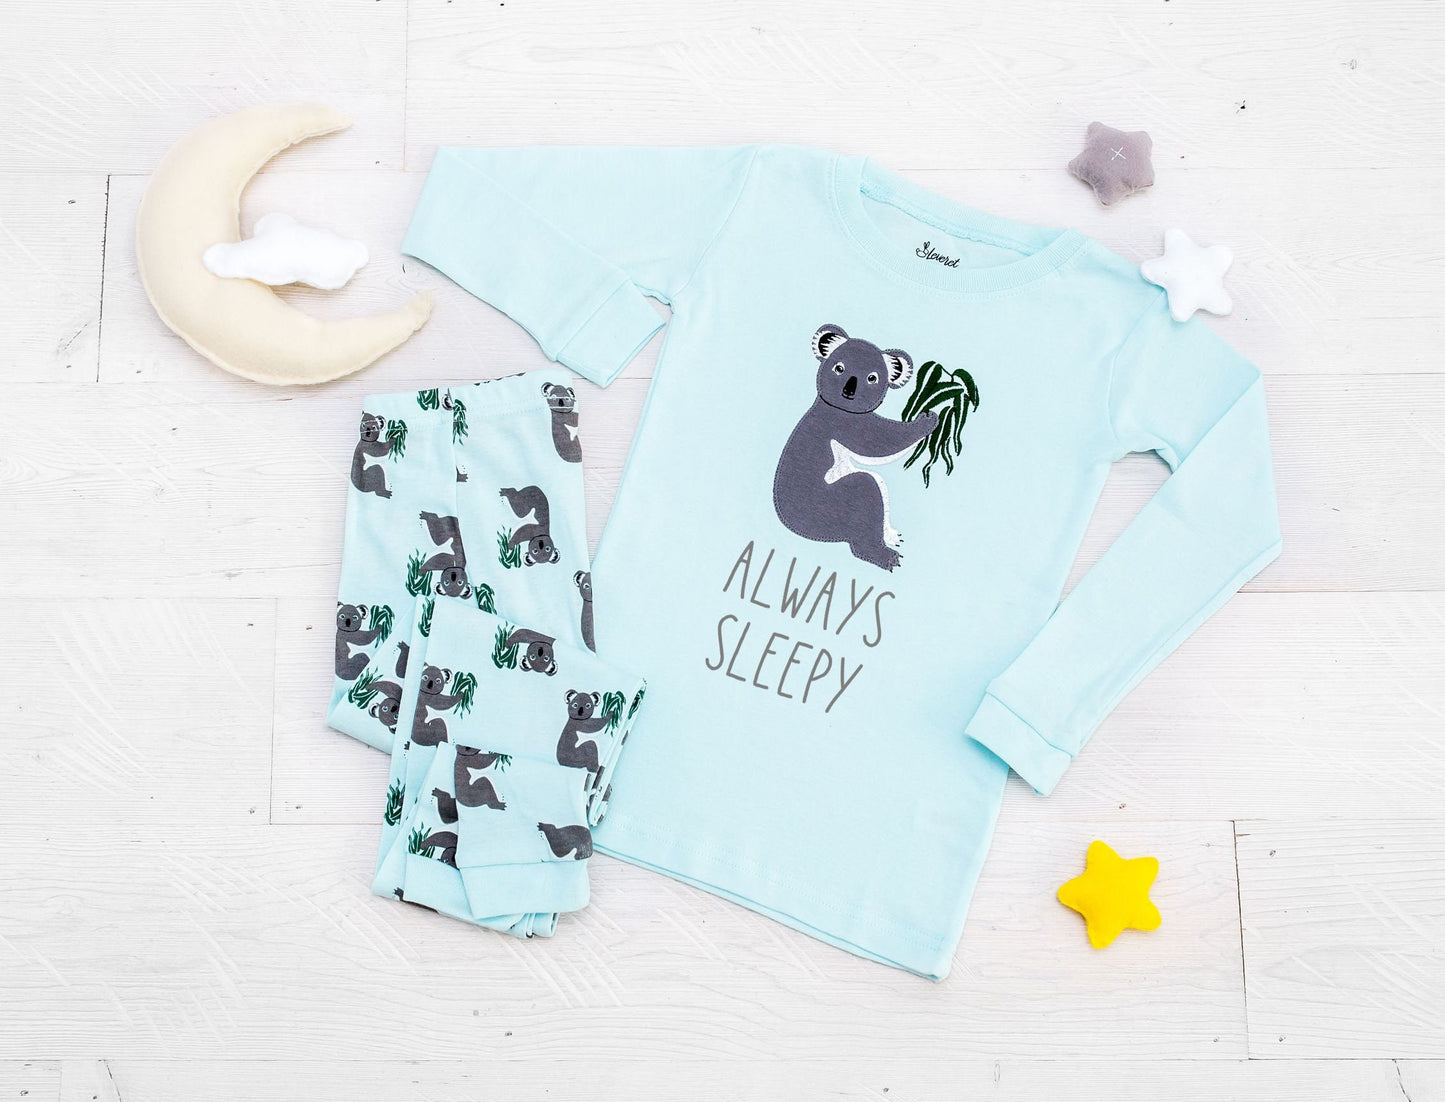 Always Sleepy Koala Pajamas -  Matching Doll Pajamas - Koala Lover Gift - Kids Pajama Set - Cotton Pajamas for Toddlers